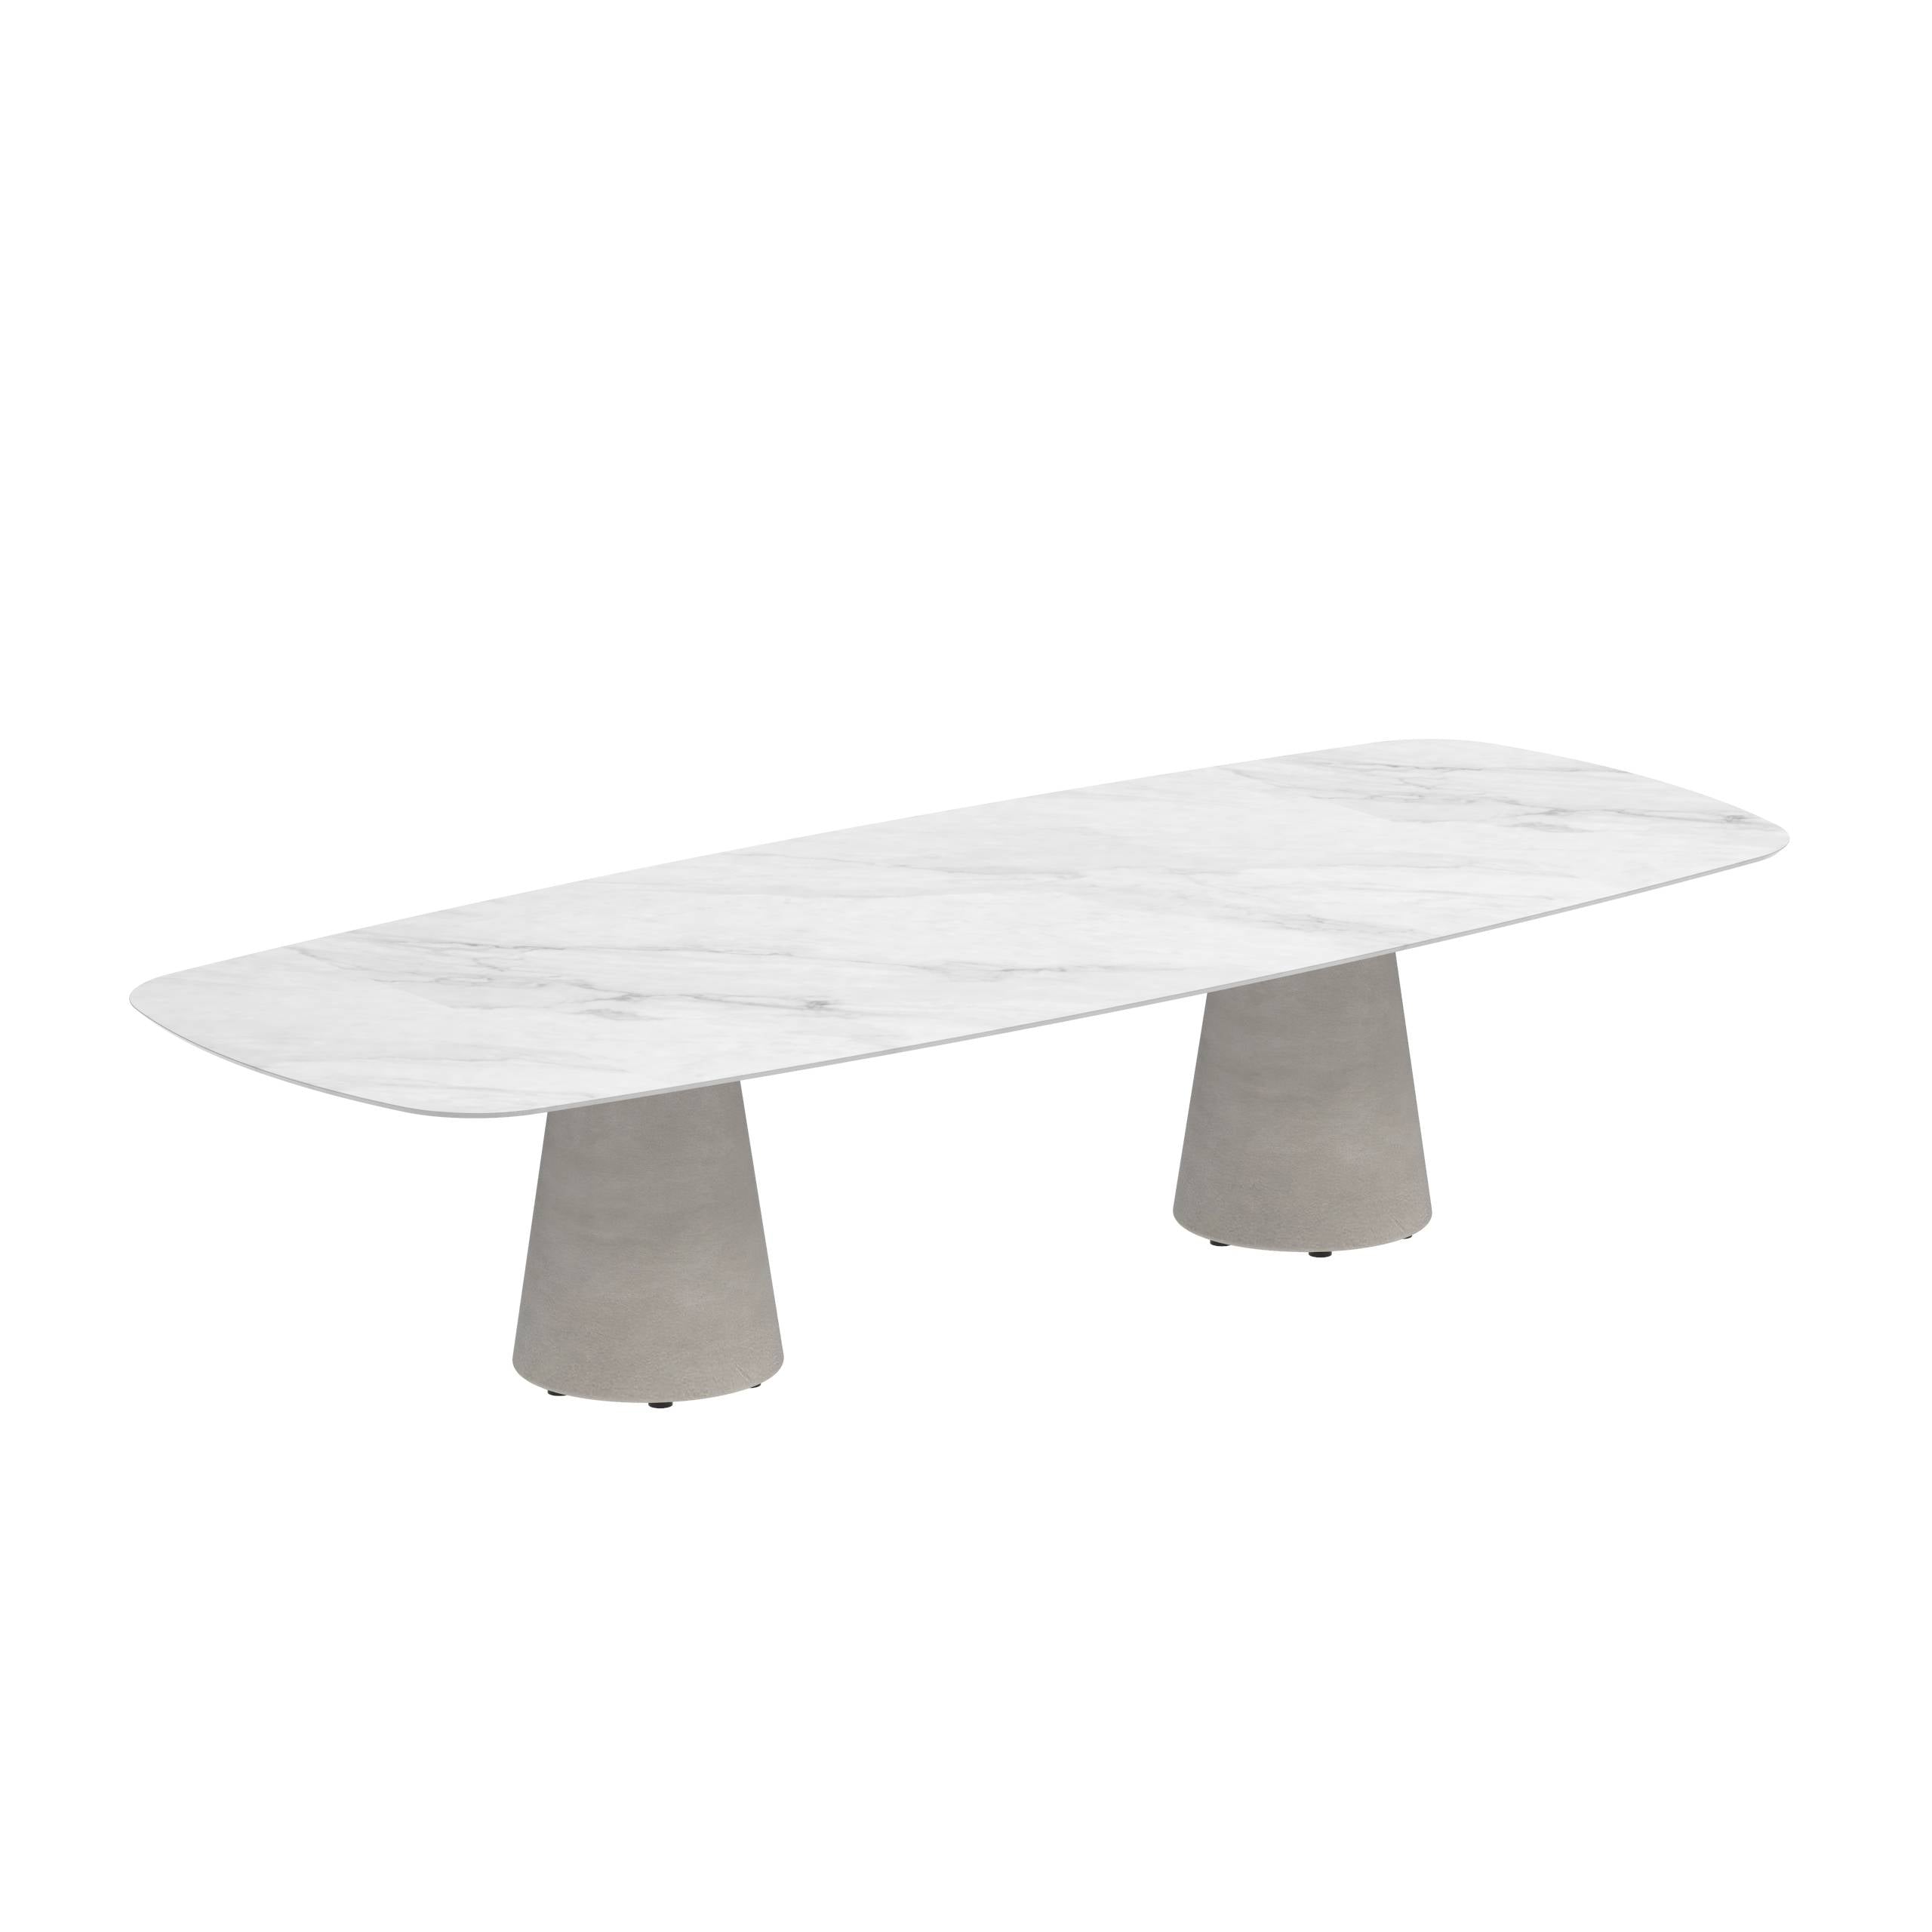 Conix Table 300x120 Cm Low Dining Legs Concrete Cement Grey - Table Top Ceramic Bianco Statuario